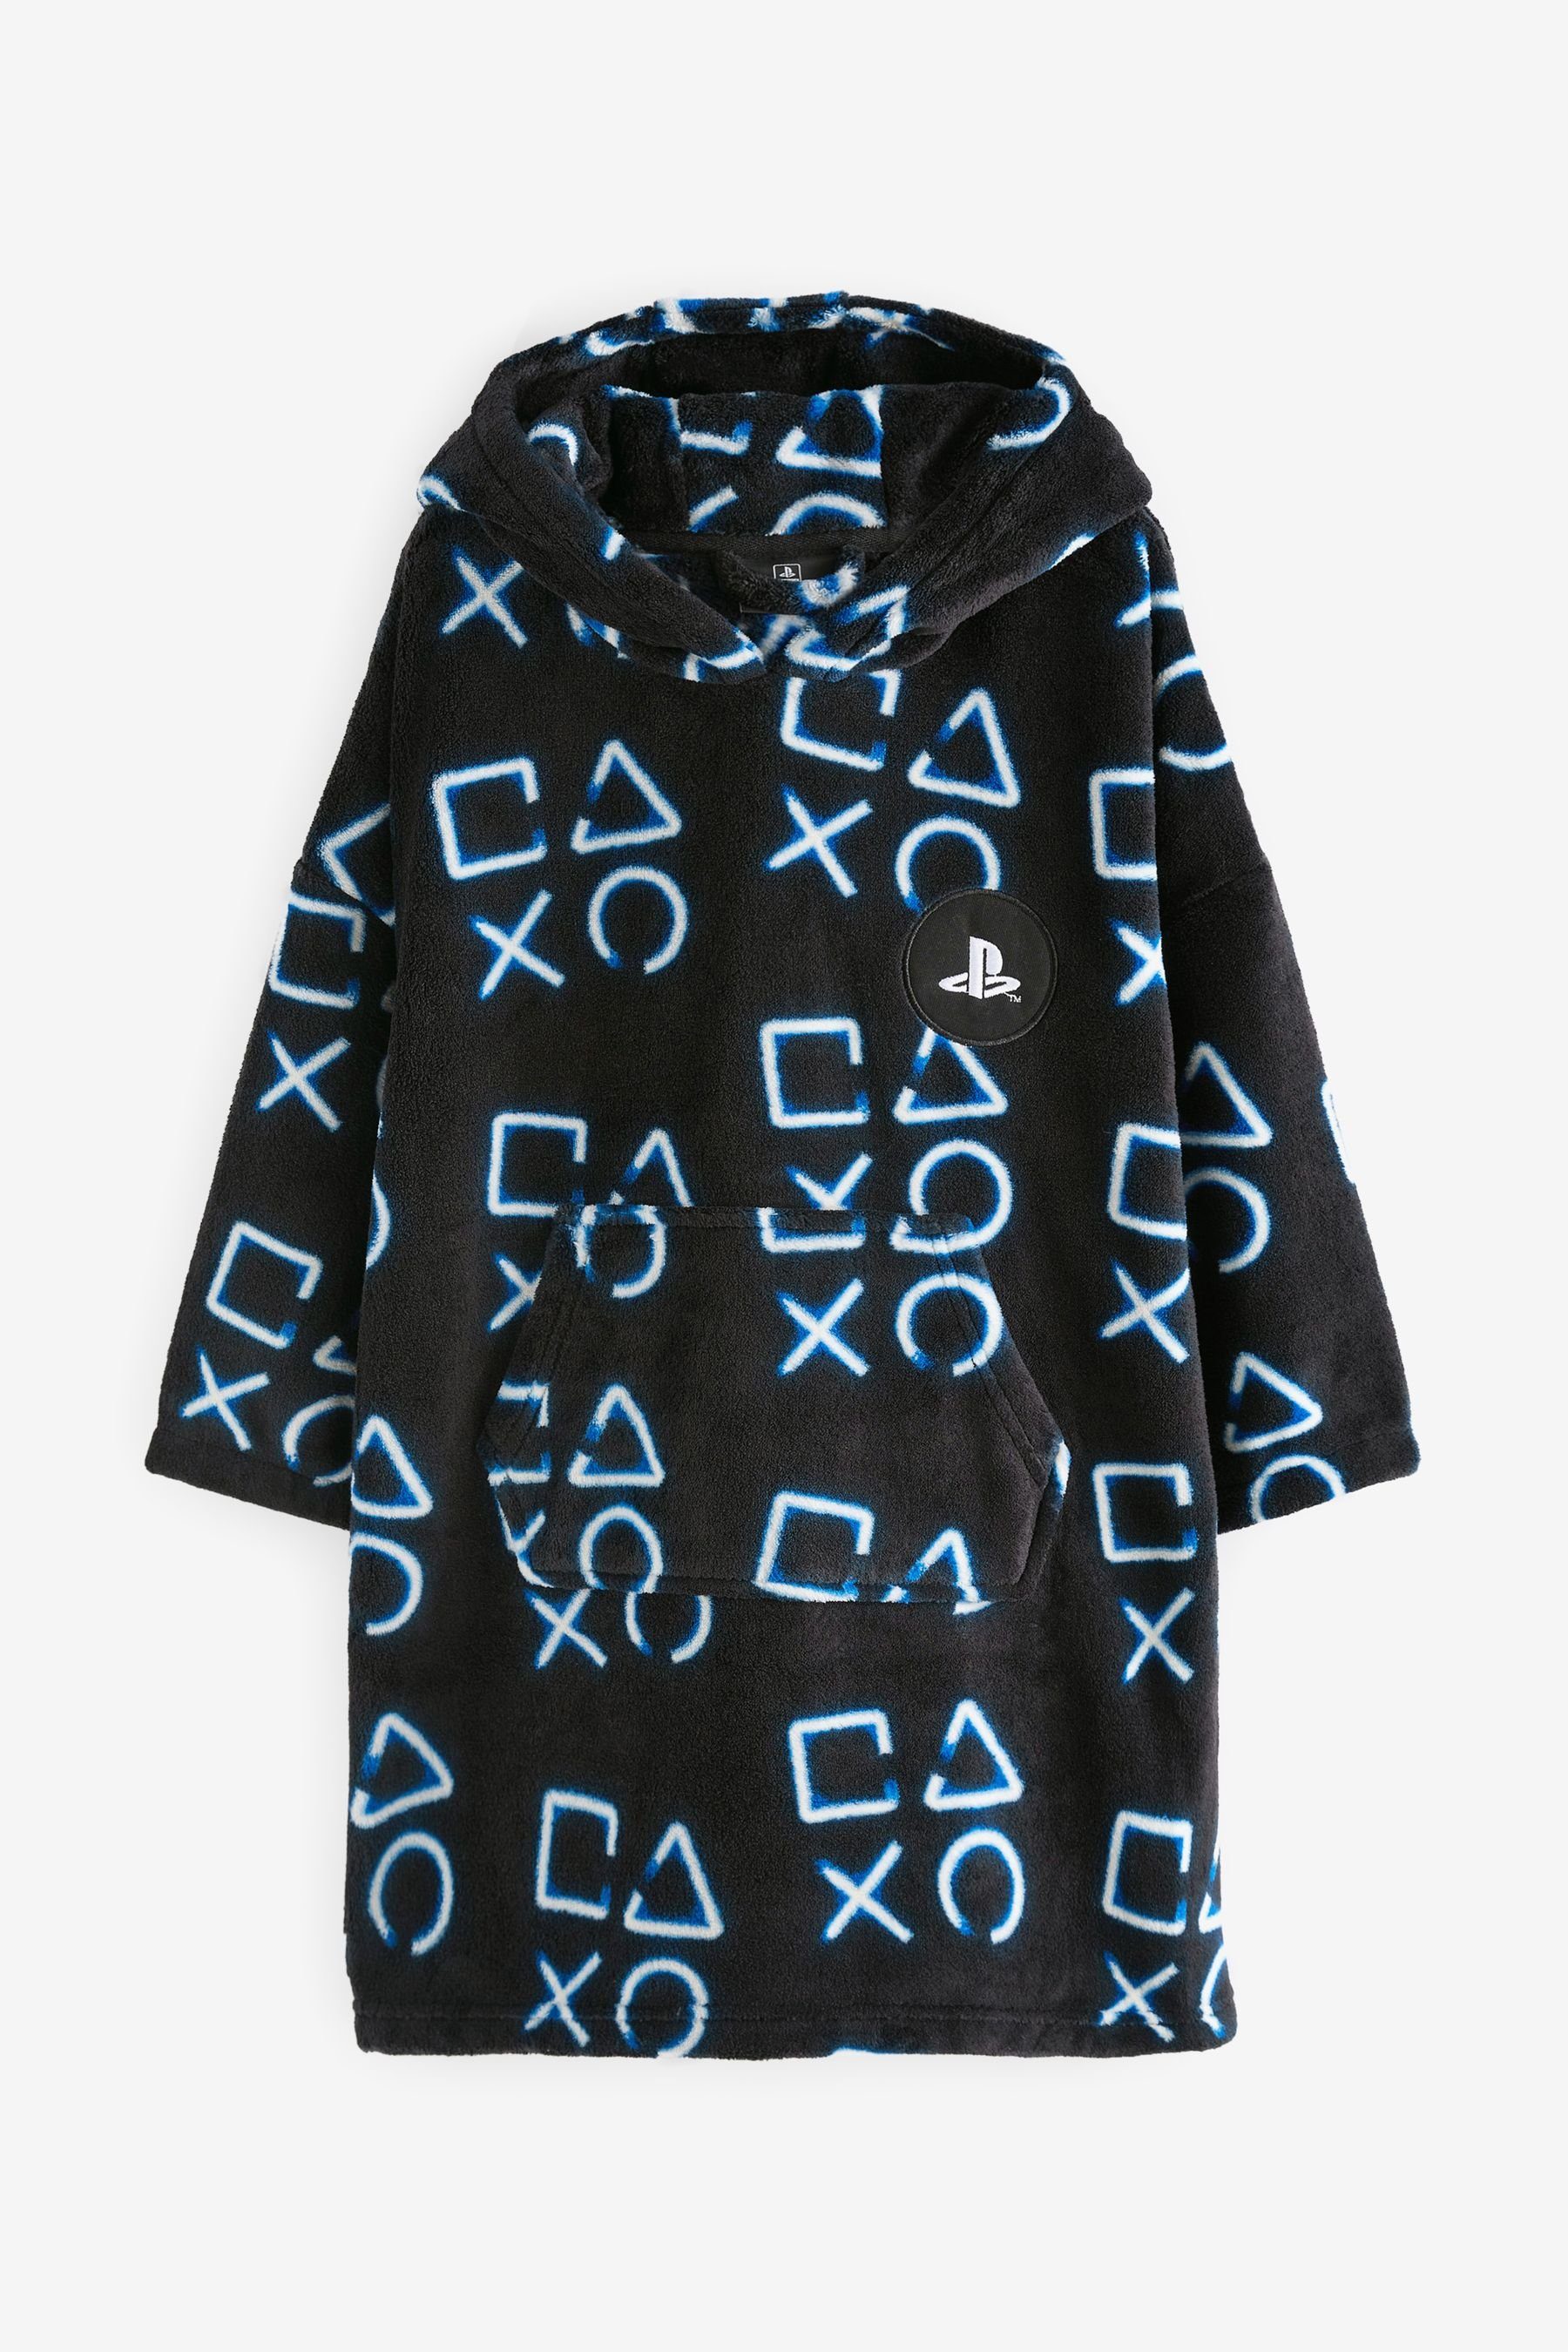 Next Kinderbademantel Decke mit Kapuze, Polyester PlayStation Navy Blue